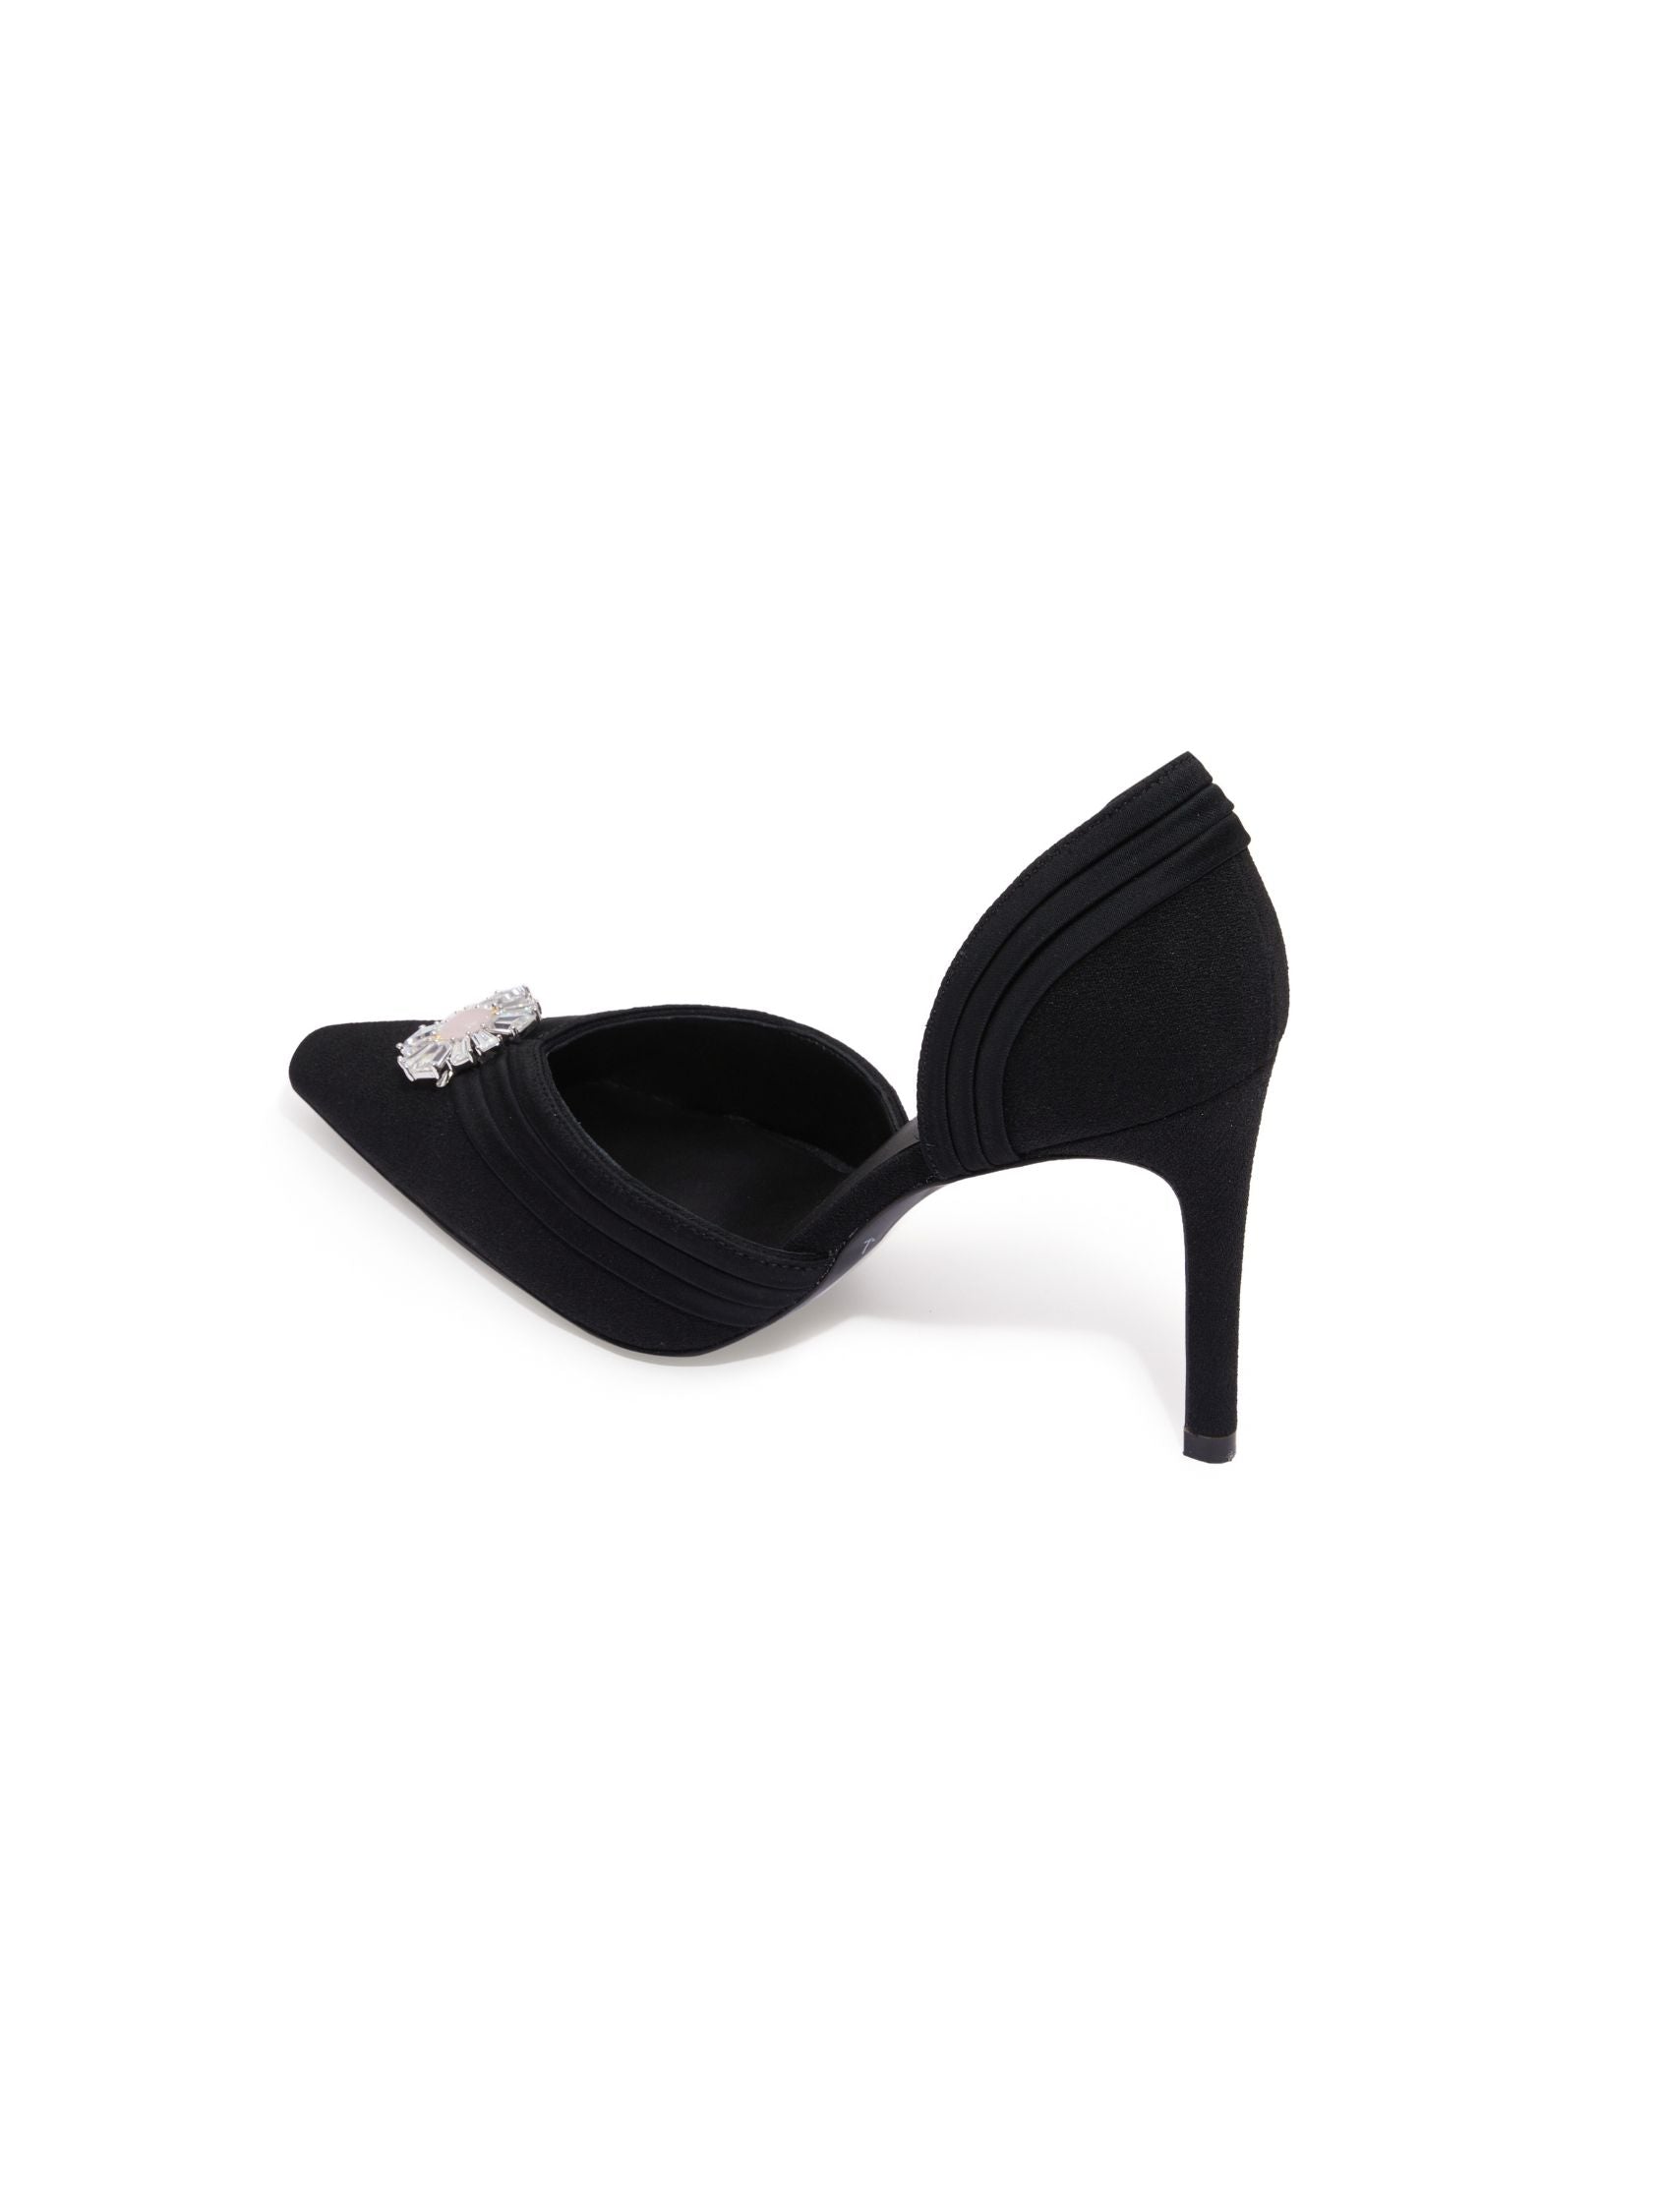 Diana Diamond Heels (Black)